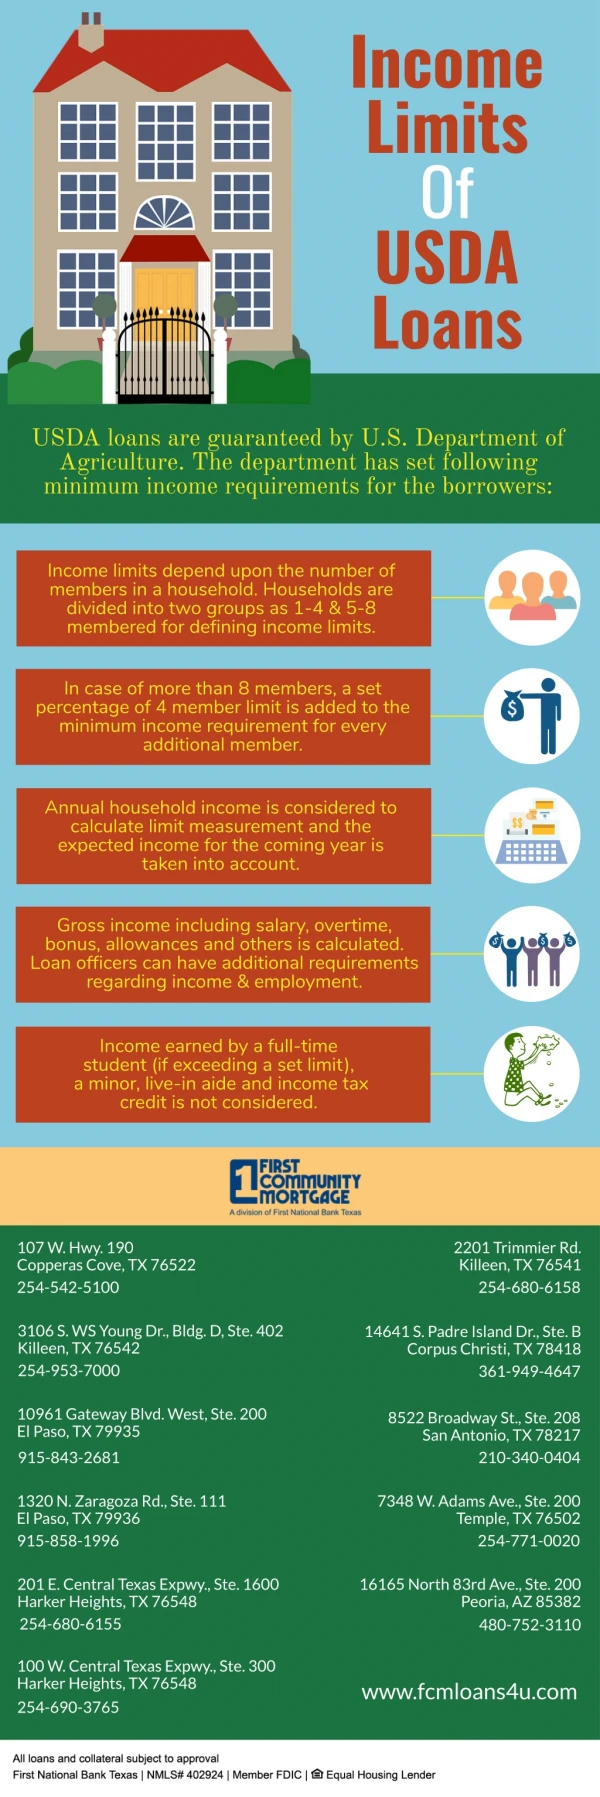 Income Limits Of USDA Loans